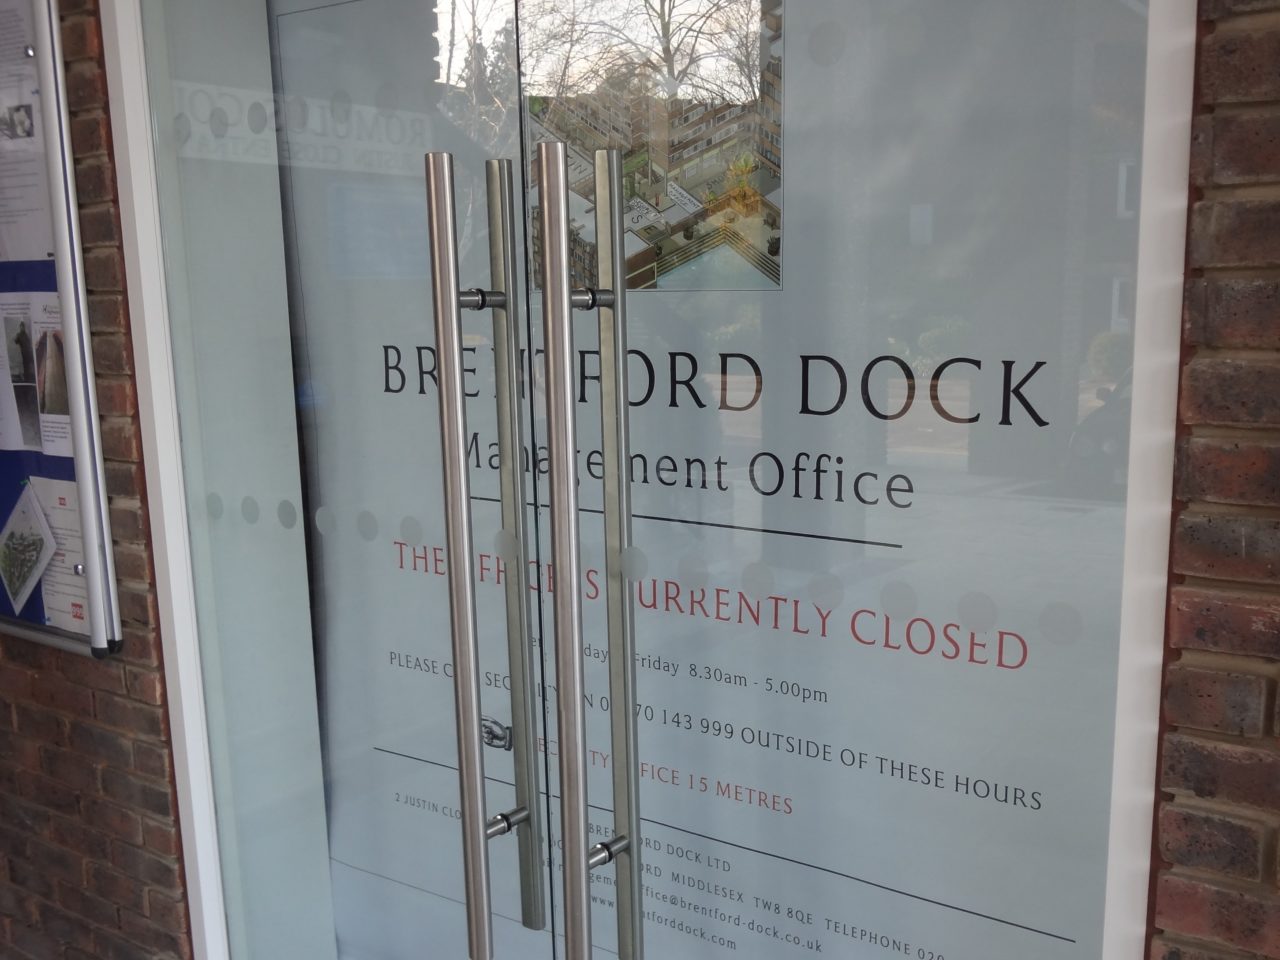 Brentford Dock Data breach